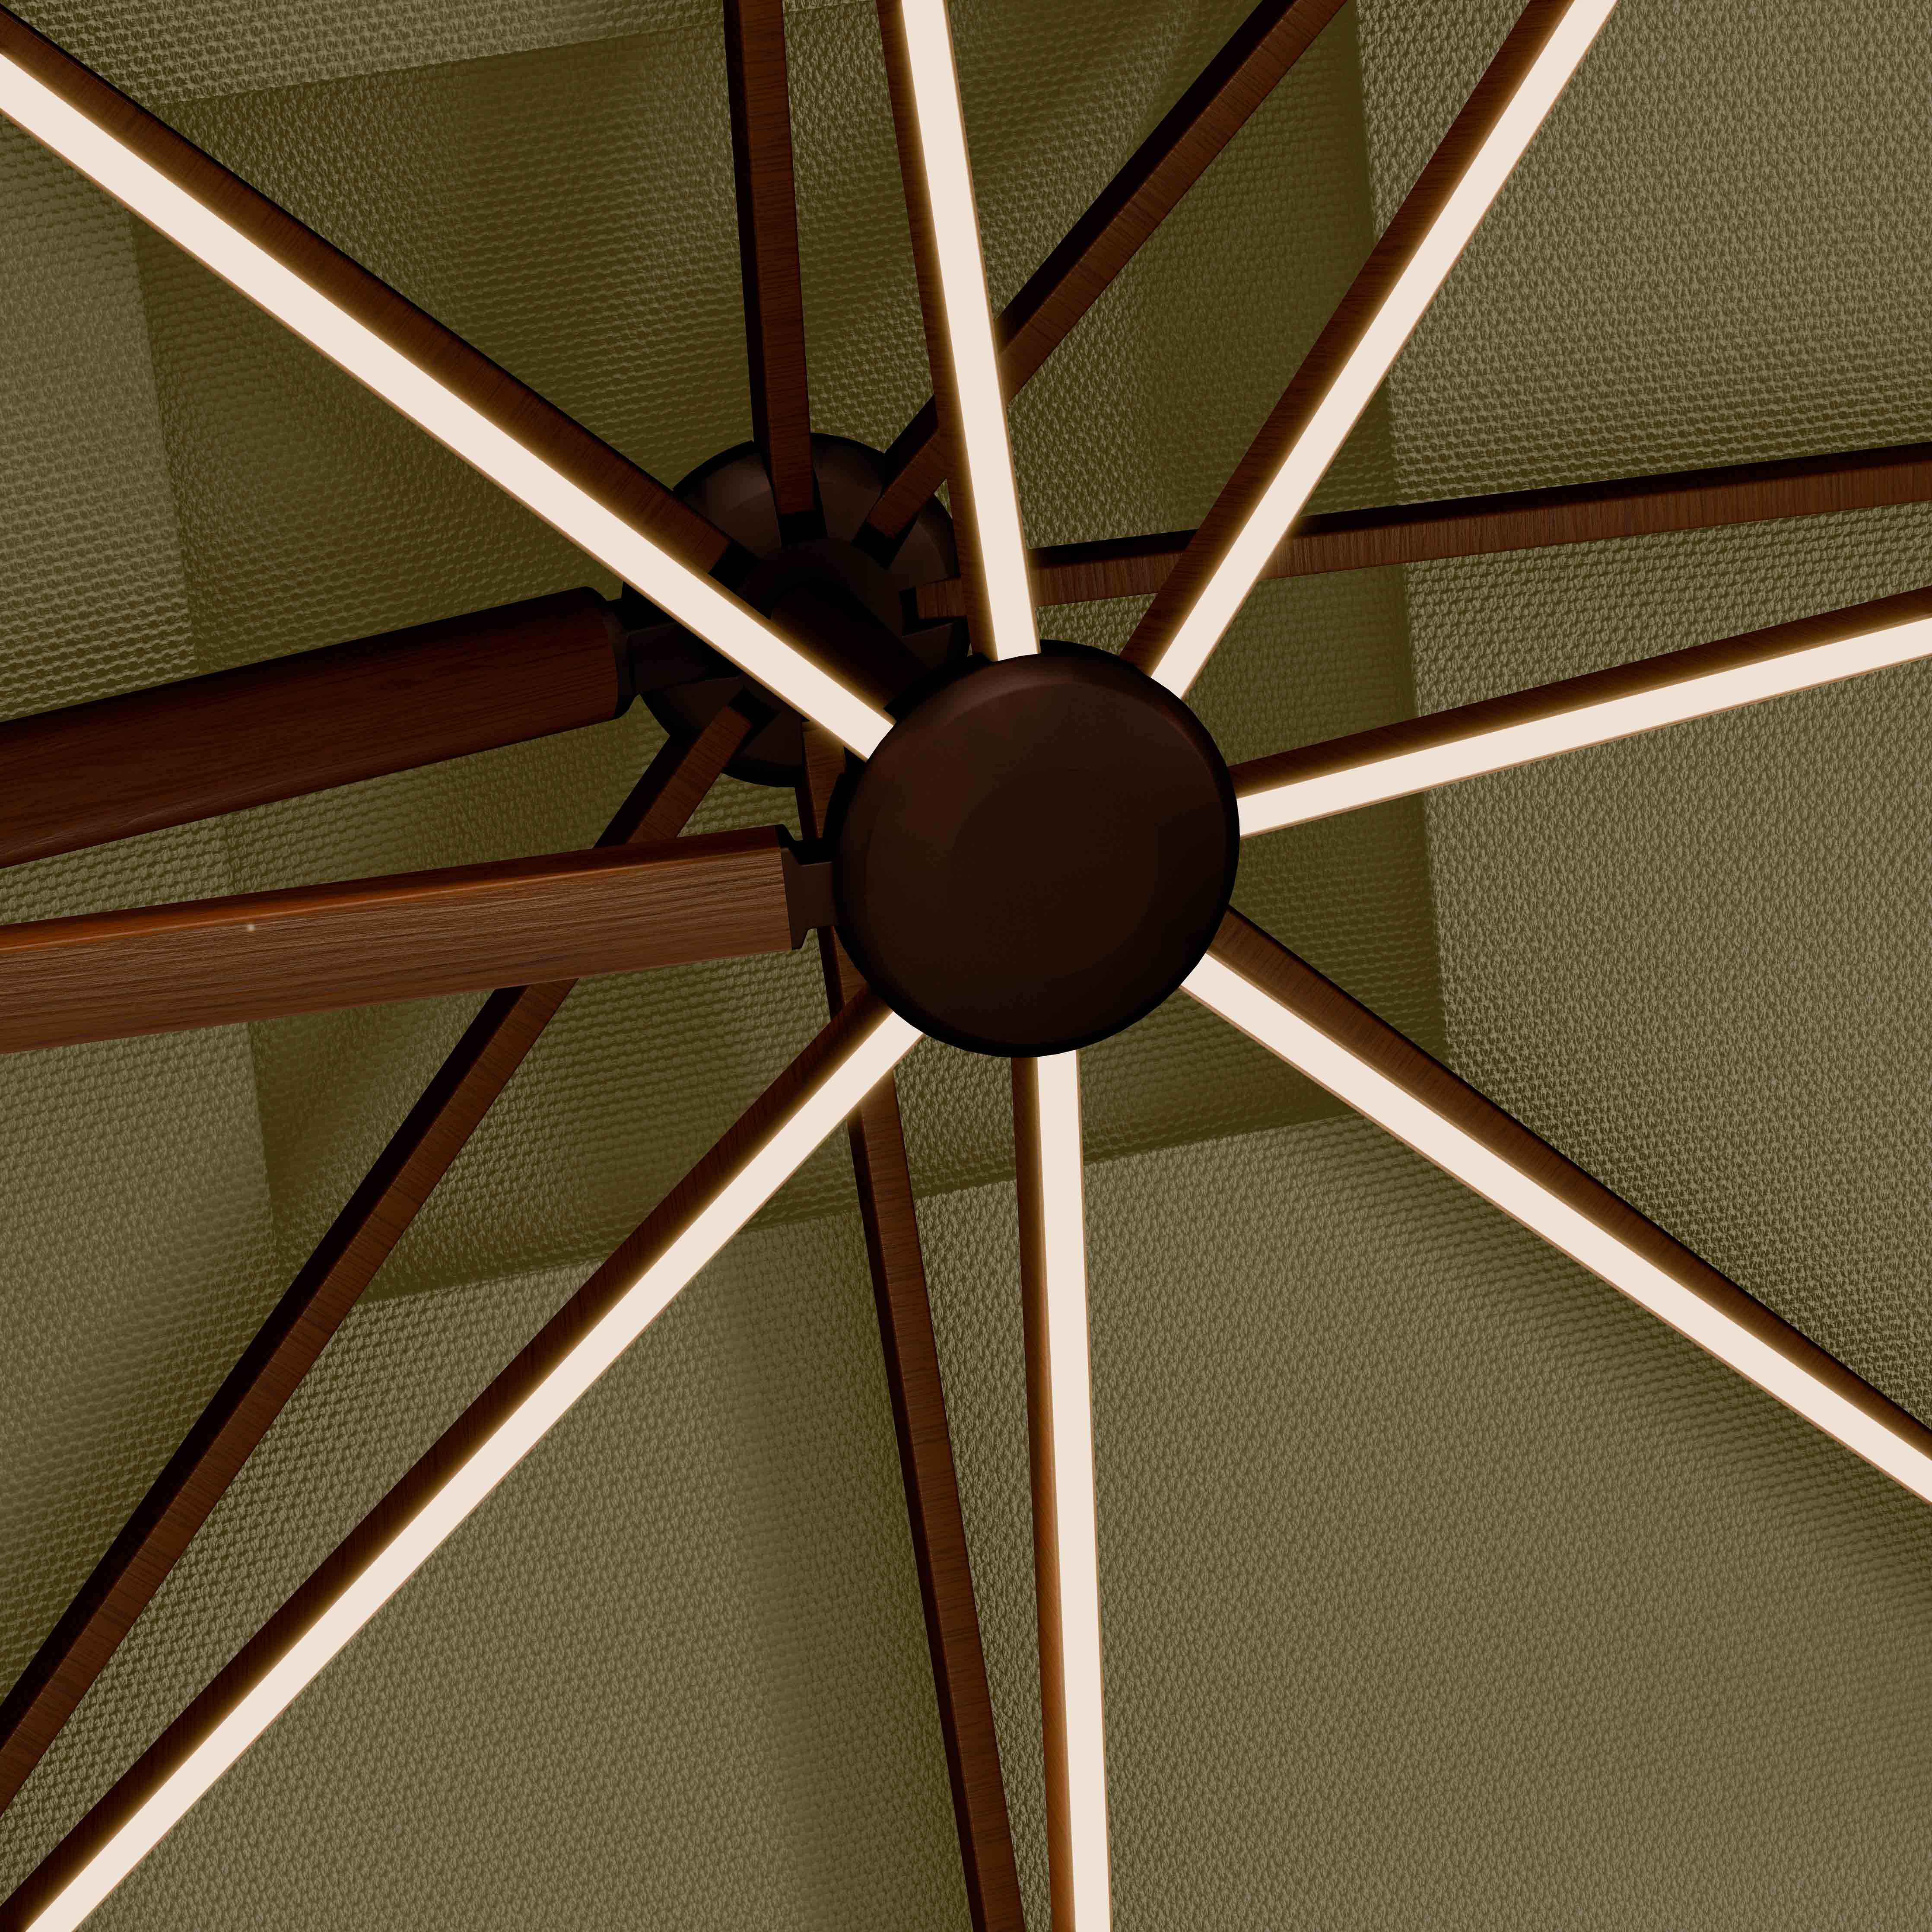 The Supreme Wooden™ - Sunbrella Antique Beige